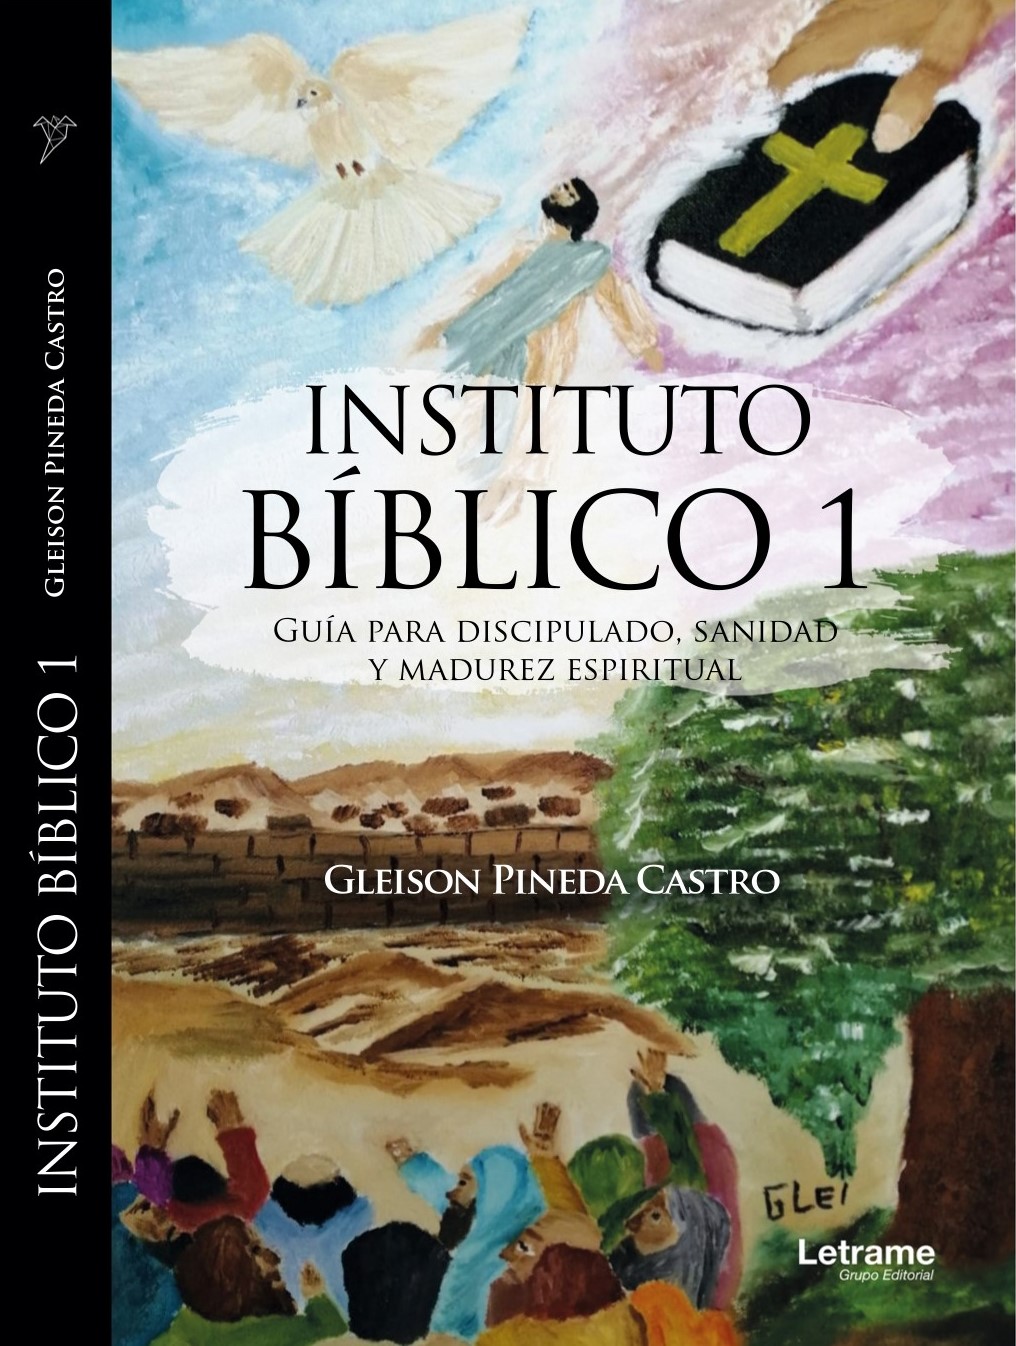 Instituto Biblico 1/ Guia Para Discipulado, Sanidad y Madurez Espiritual